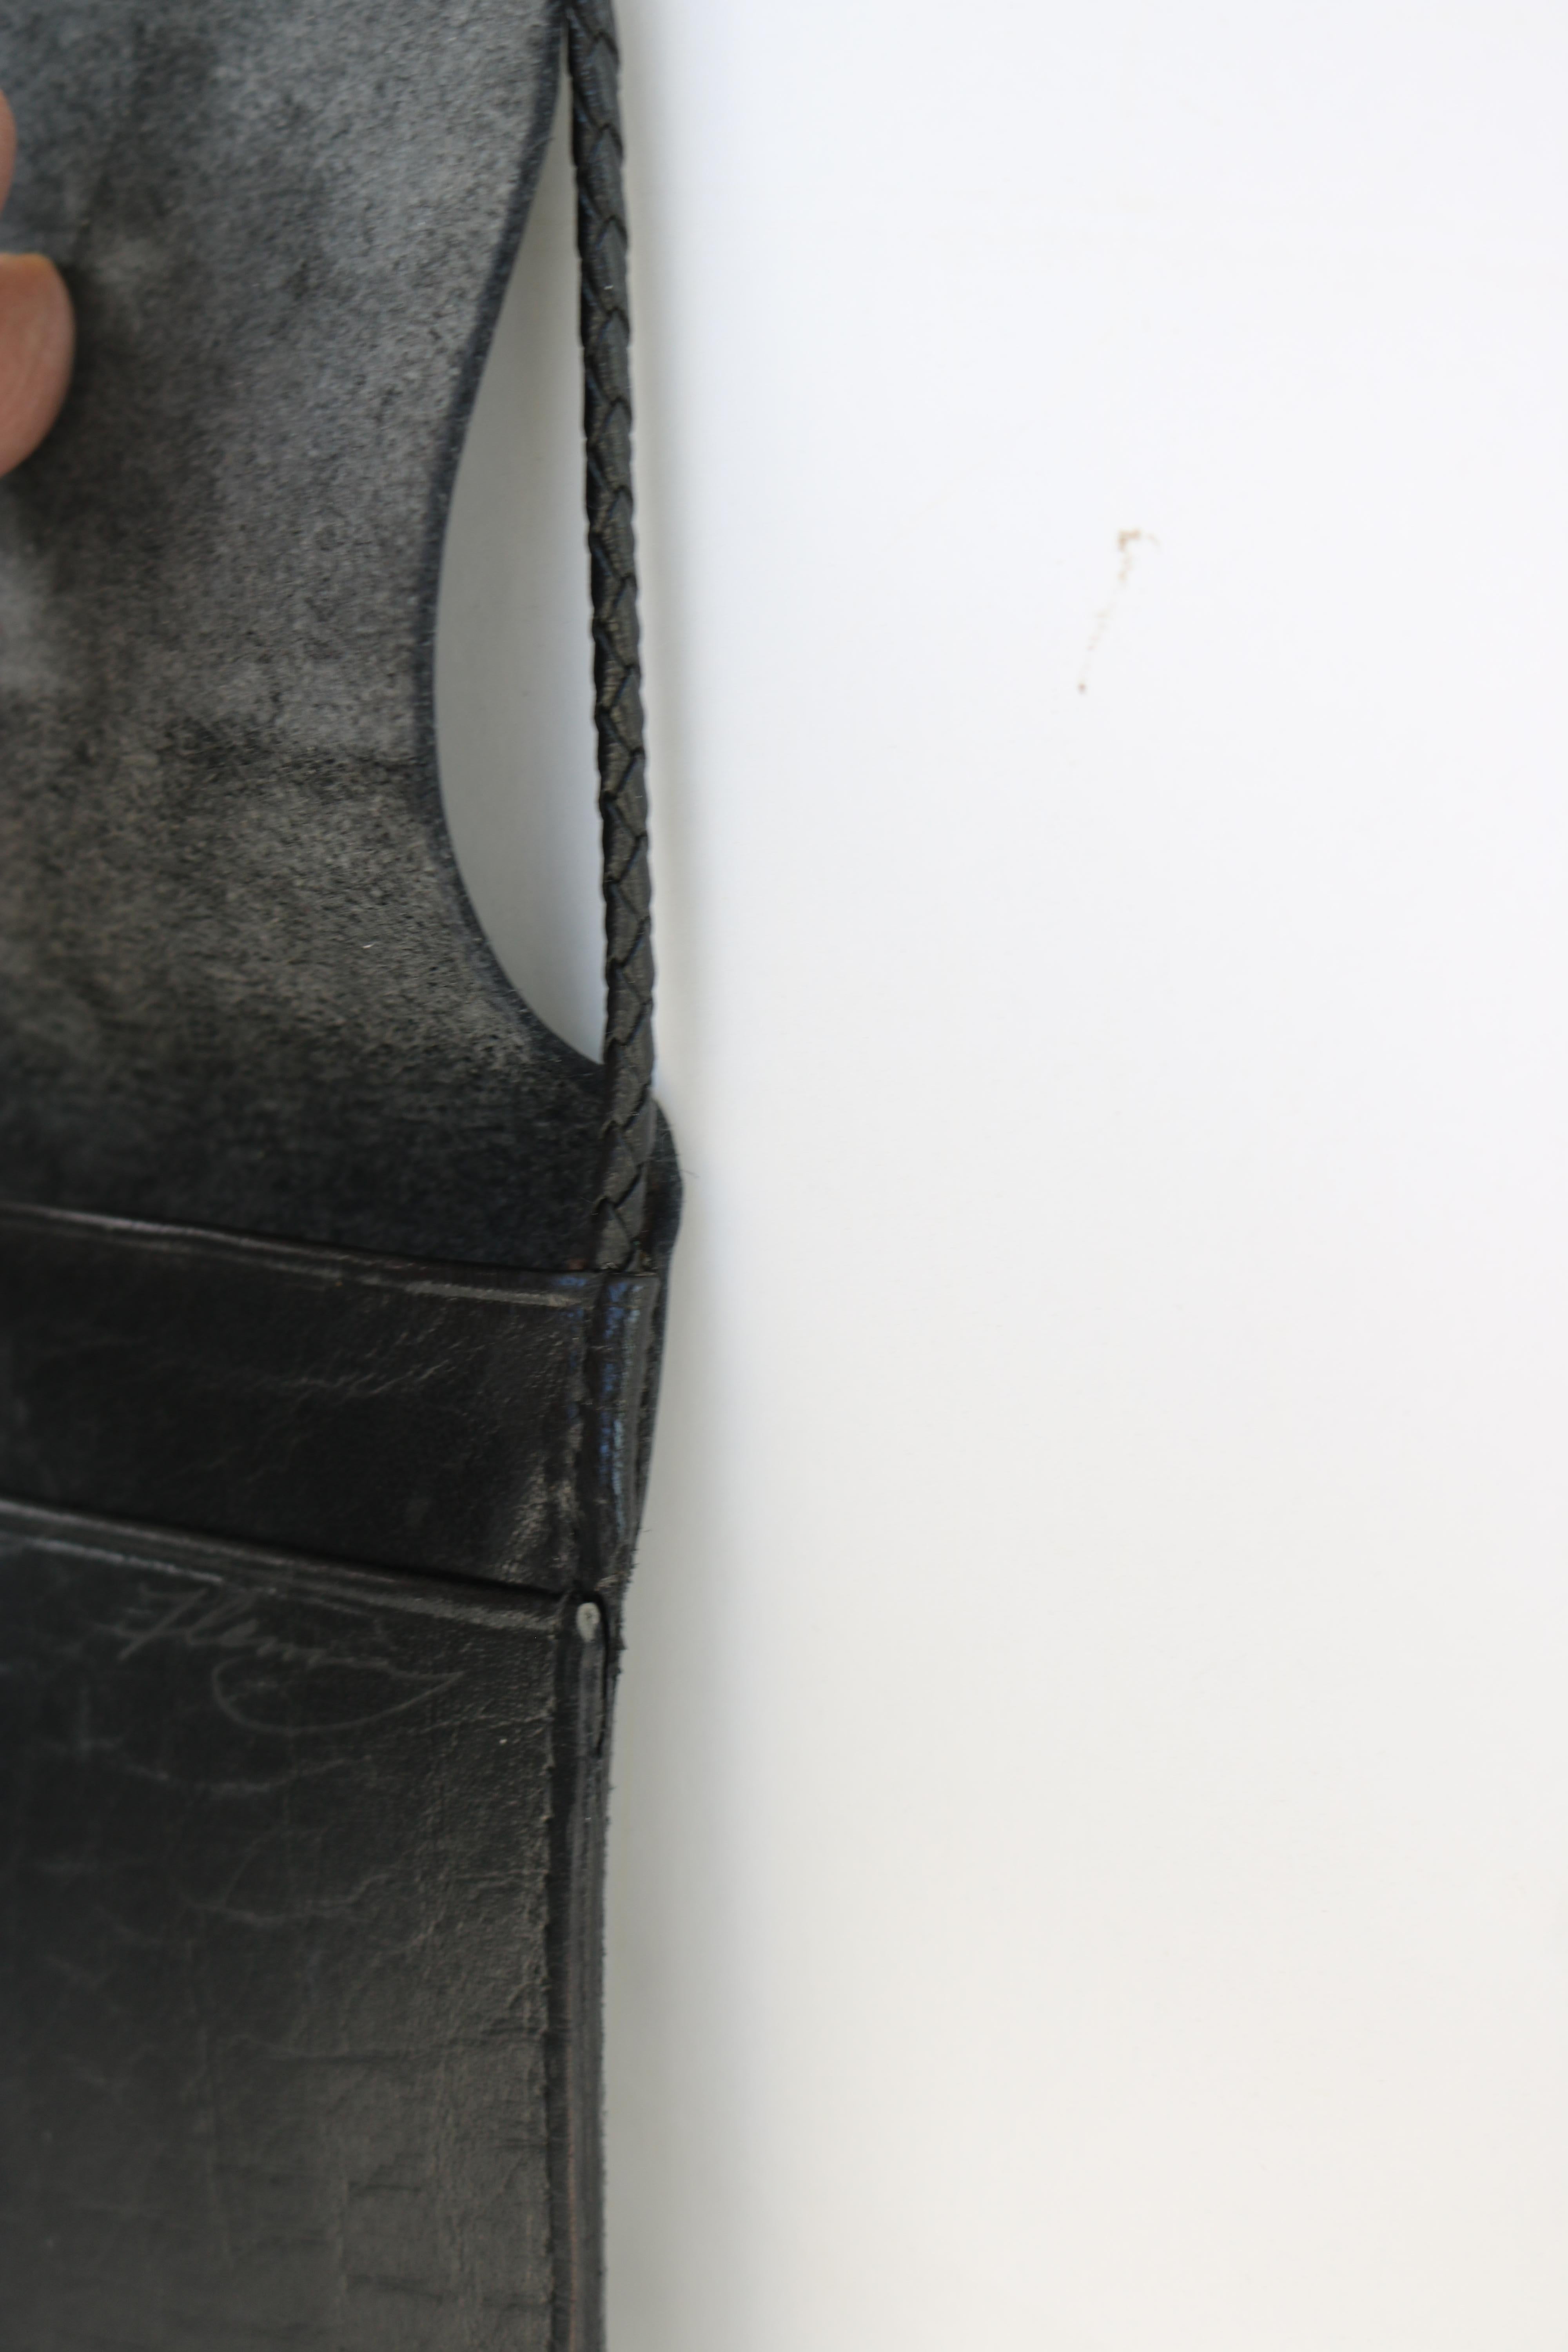 1970s Lizard Gem Tassels Crossbody Bag-Lightweight for Phone, Passport, Everyday For Sale 5